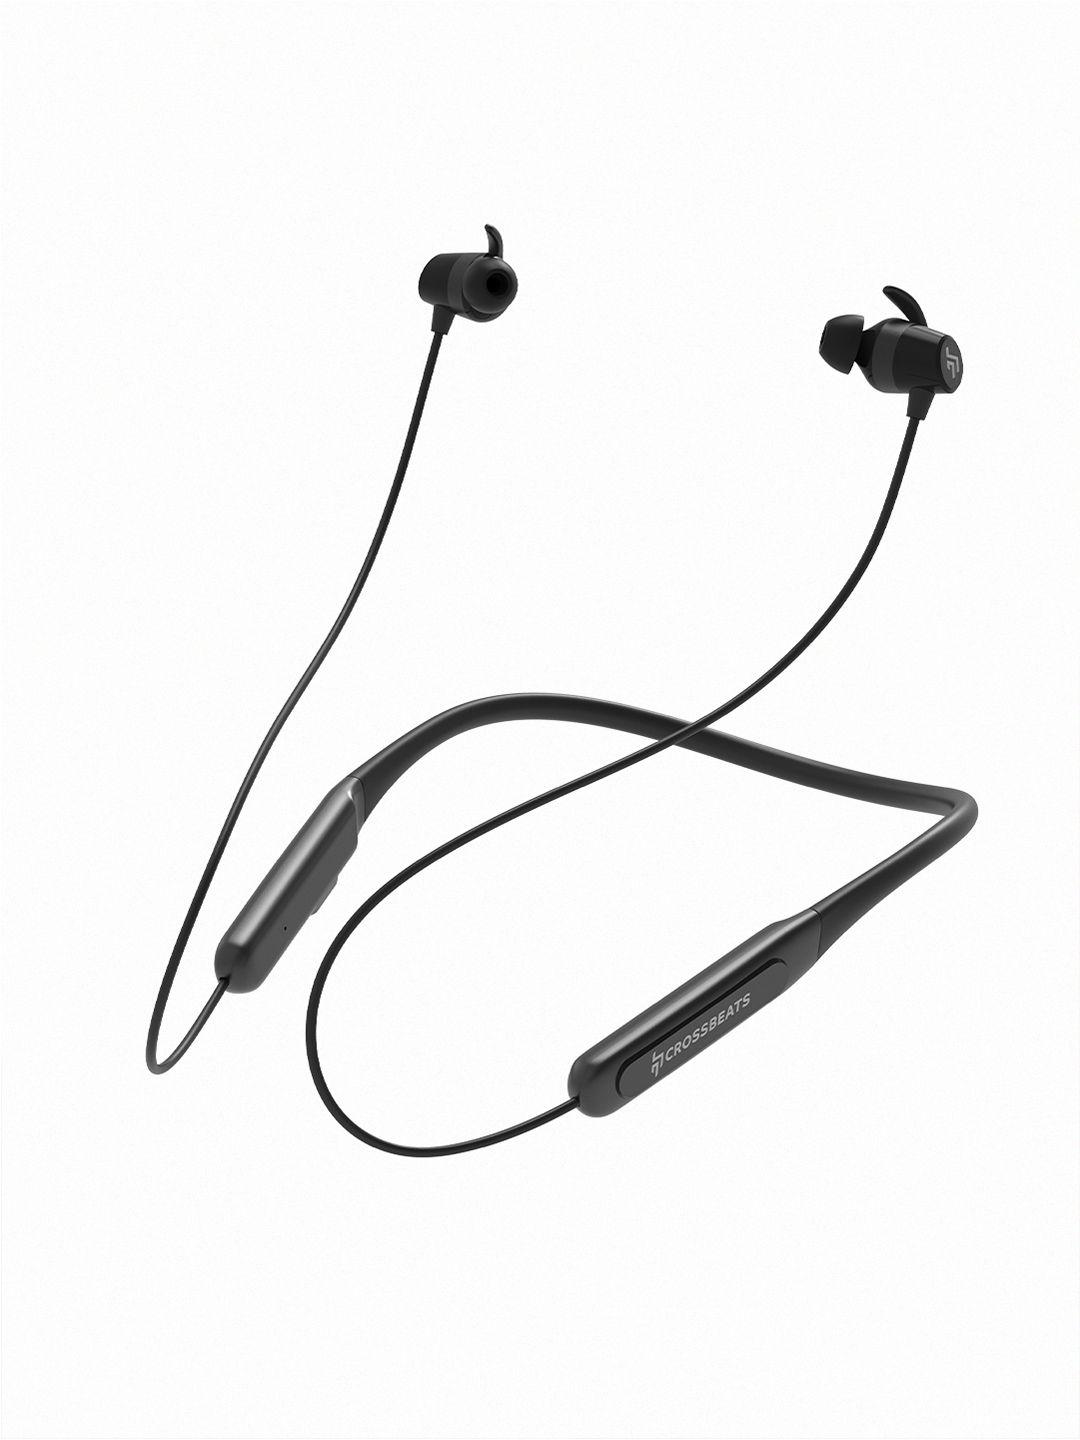 crossbeats shuffl neckband 72 hrs playtime enc mode 13mm bluetooth & wired headset